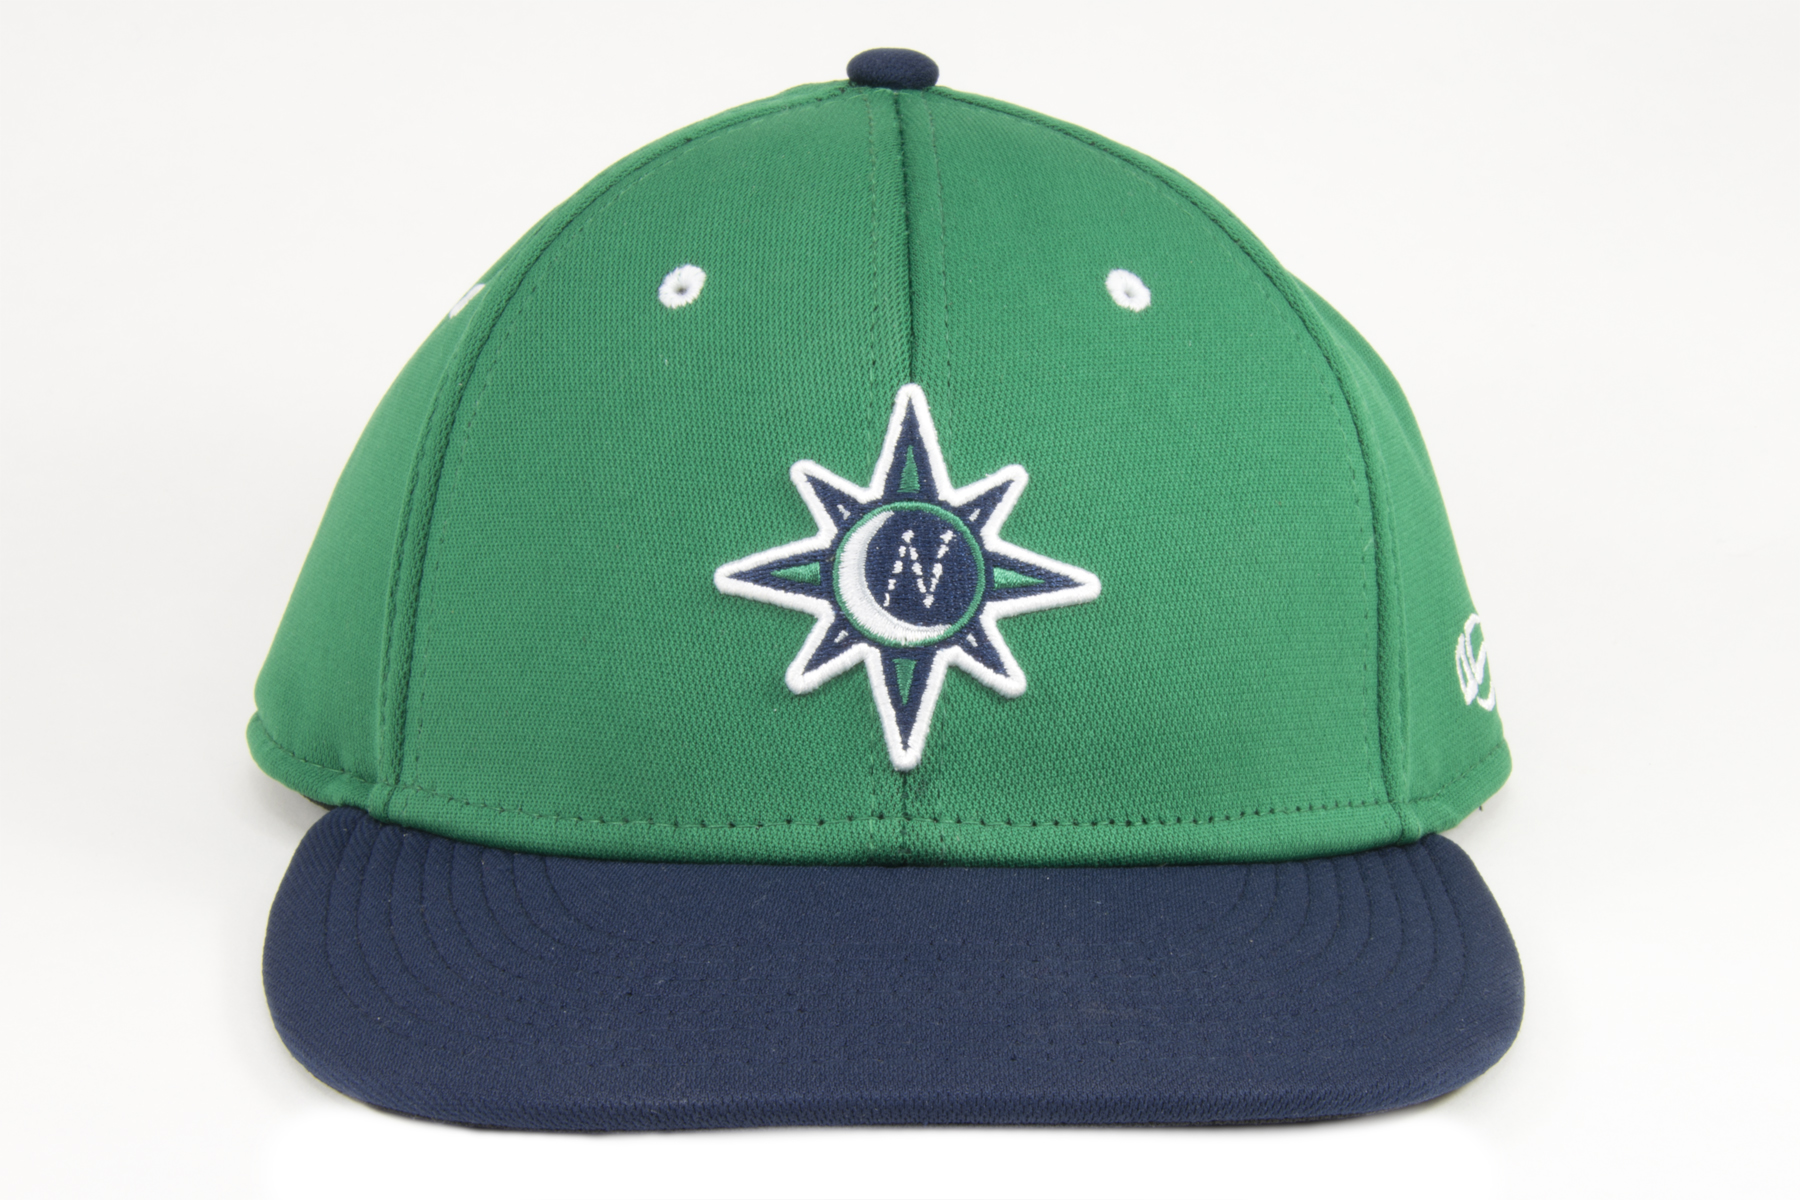 Navigators logo on the team baseball cap